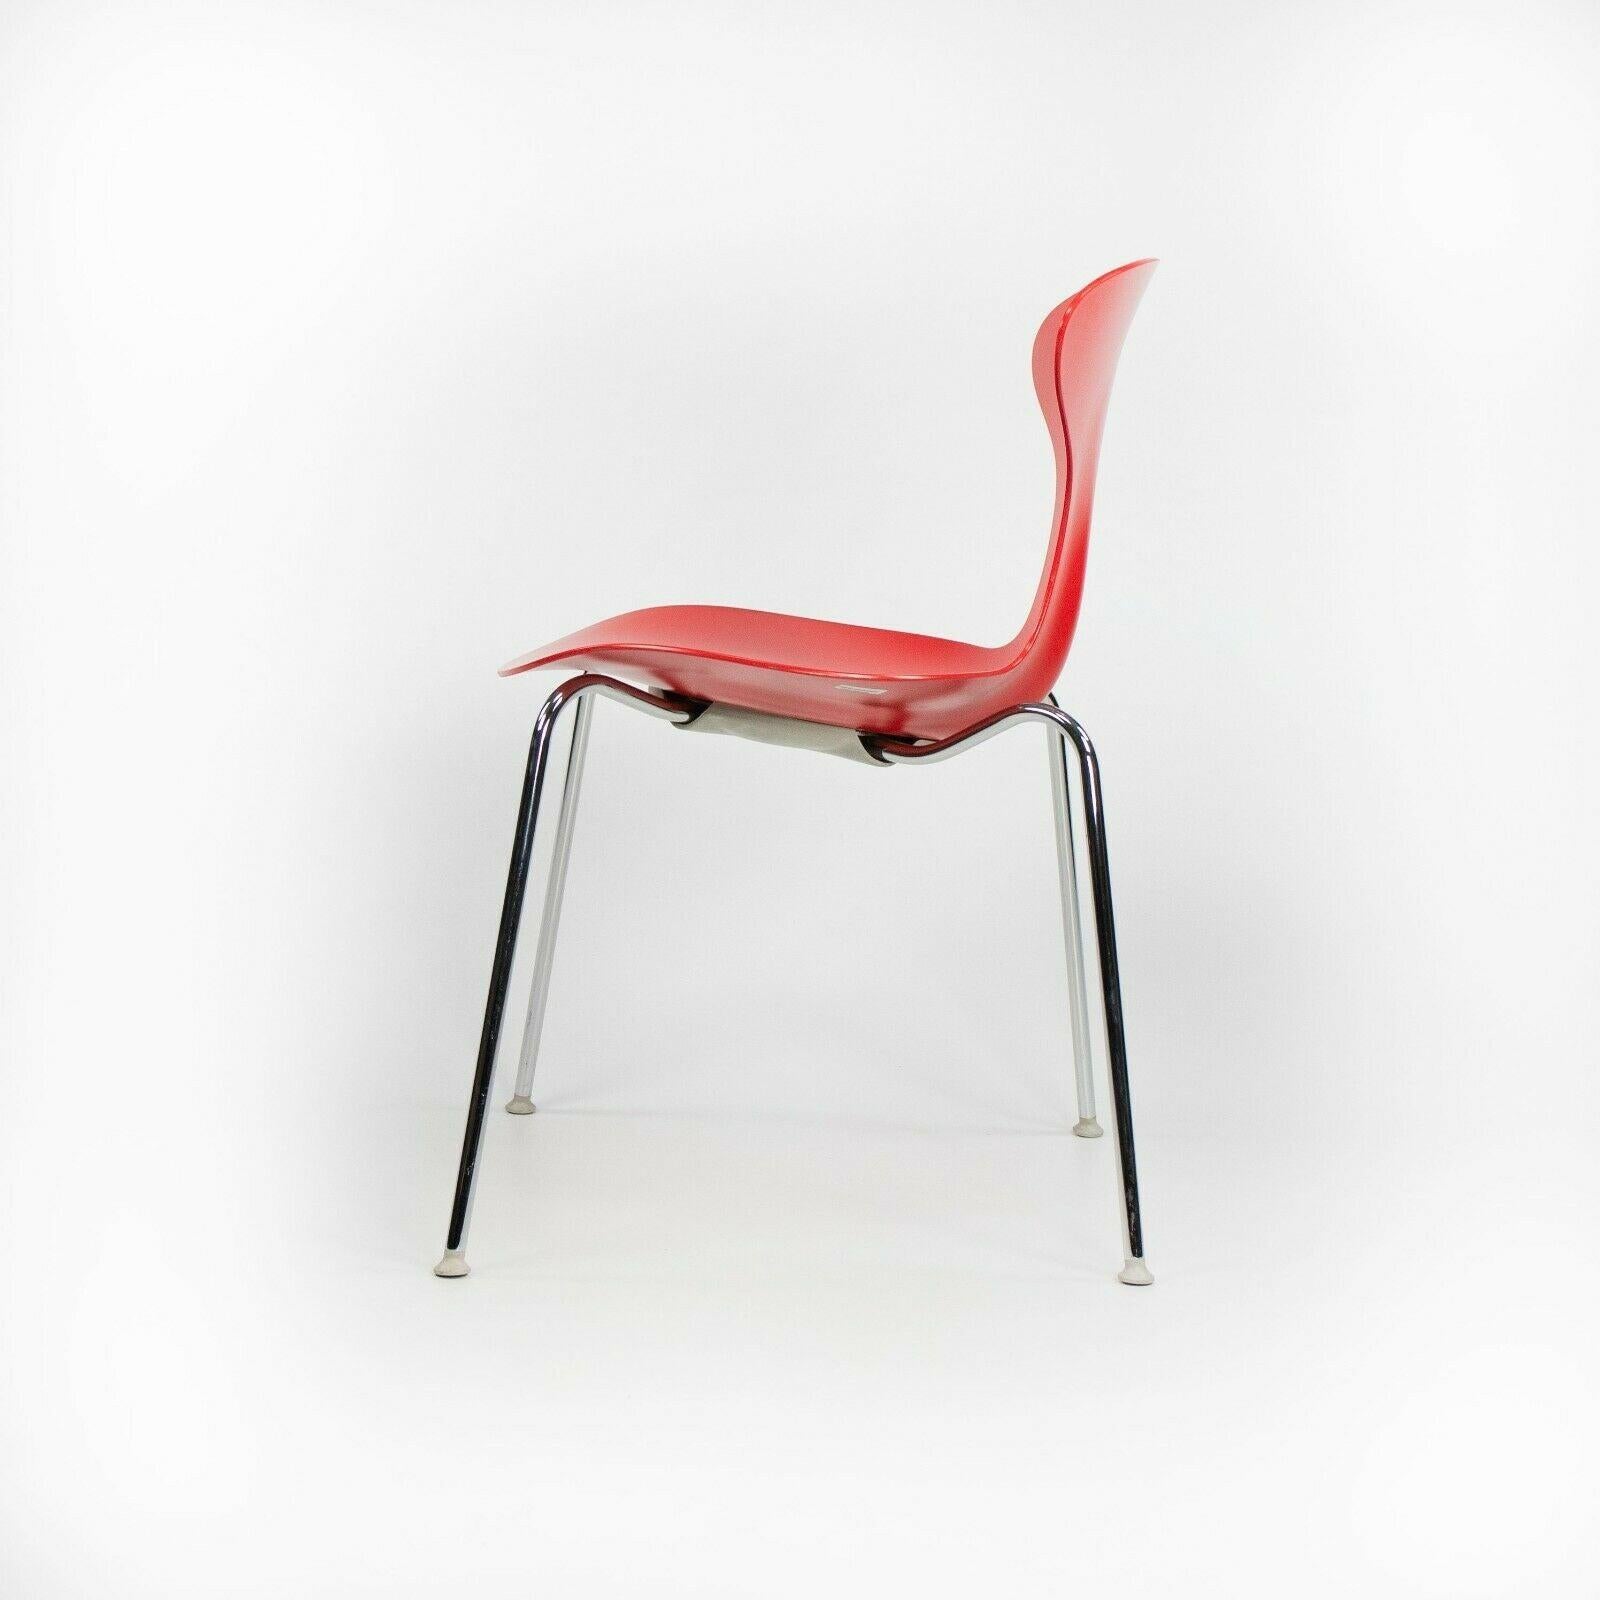 2010s Ross Lovegrove Orbit Chair by Bernhardt Design in Red Plastic Chrome Legs For Sale 3